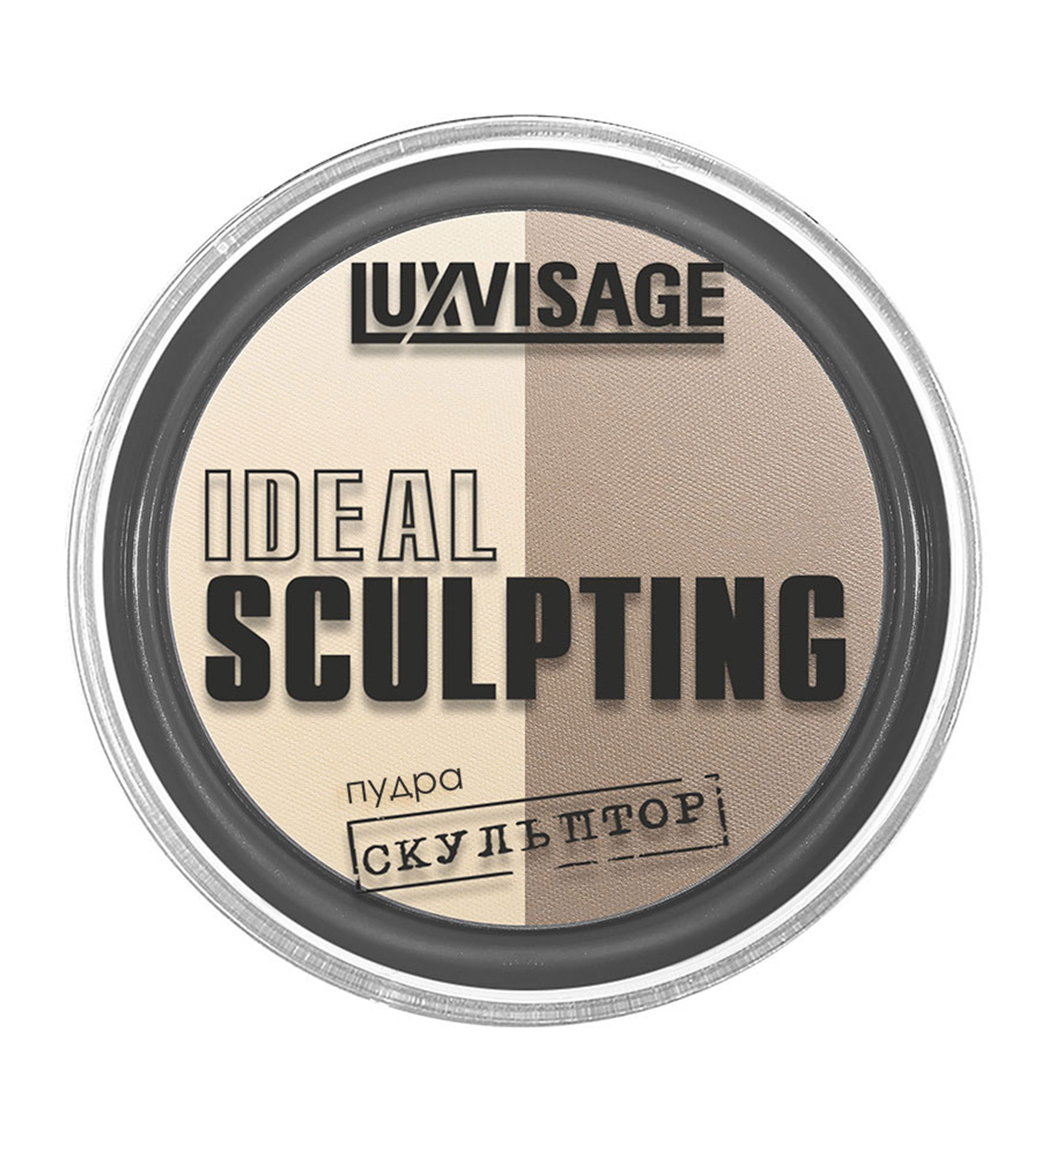 Luxvisage Пудра-скульптор Ideal Sculpting, 9 г (Luxvisage, Лицо) пудра скульптор ideal sculpting тон 01